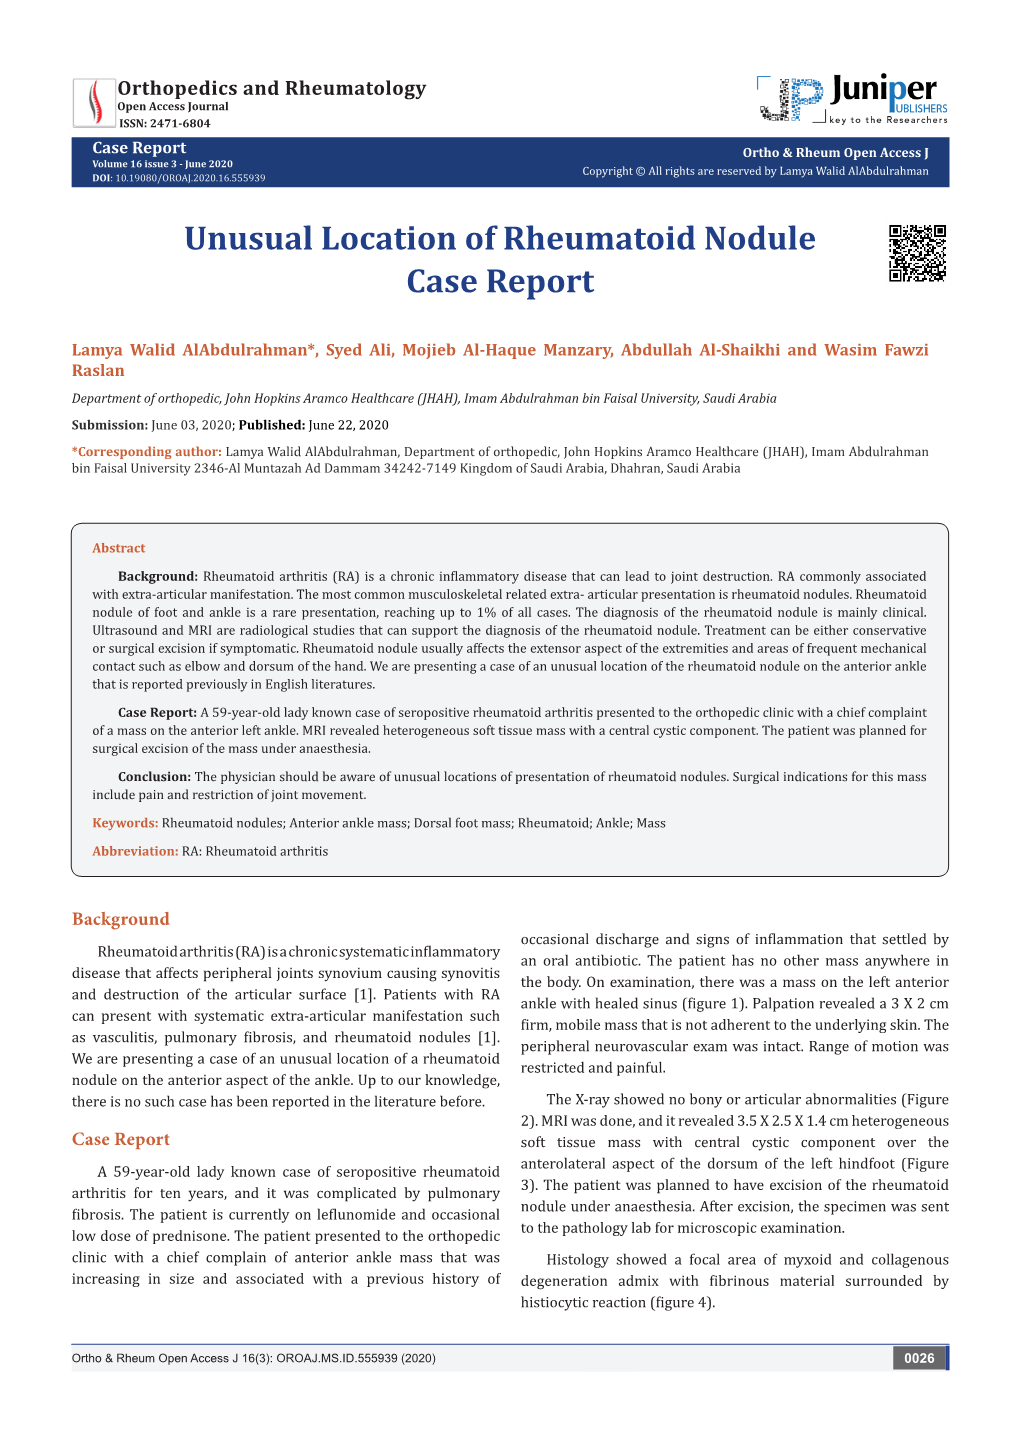 Unusual Location of Rheumatoid Nodule Case Report